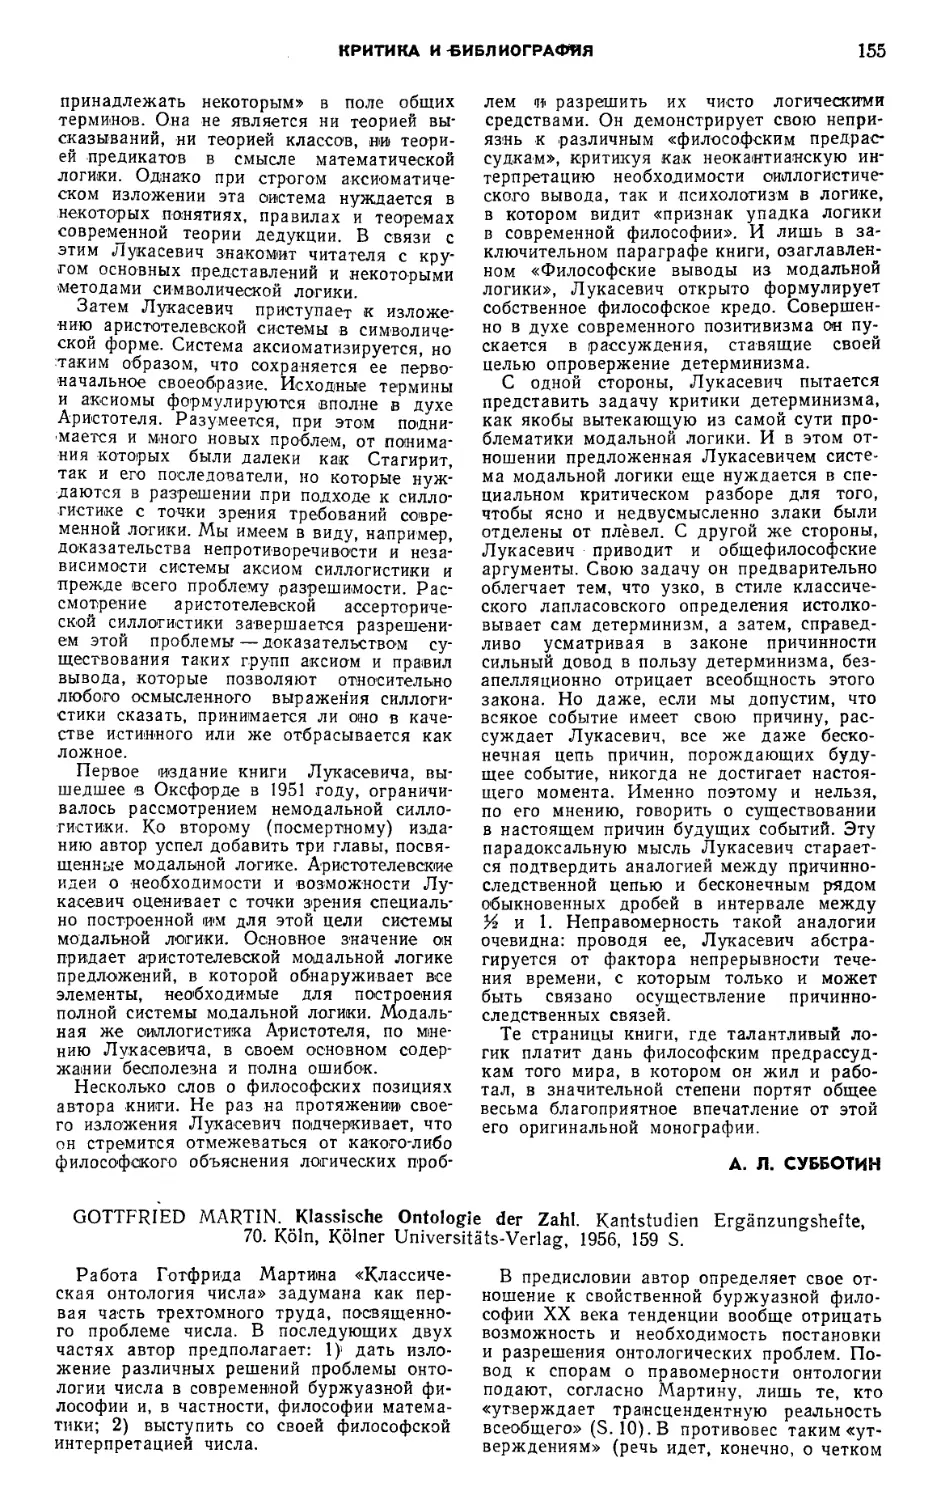 H. В. Мотрошилова — Gottfried Martin. Klassische Ontologie der Zahl. Kantstudien Erganzungshefte, 70, Koln. Kolner Universitats — Verlag, 1956, 159 S